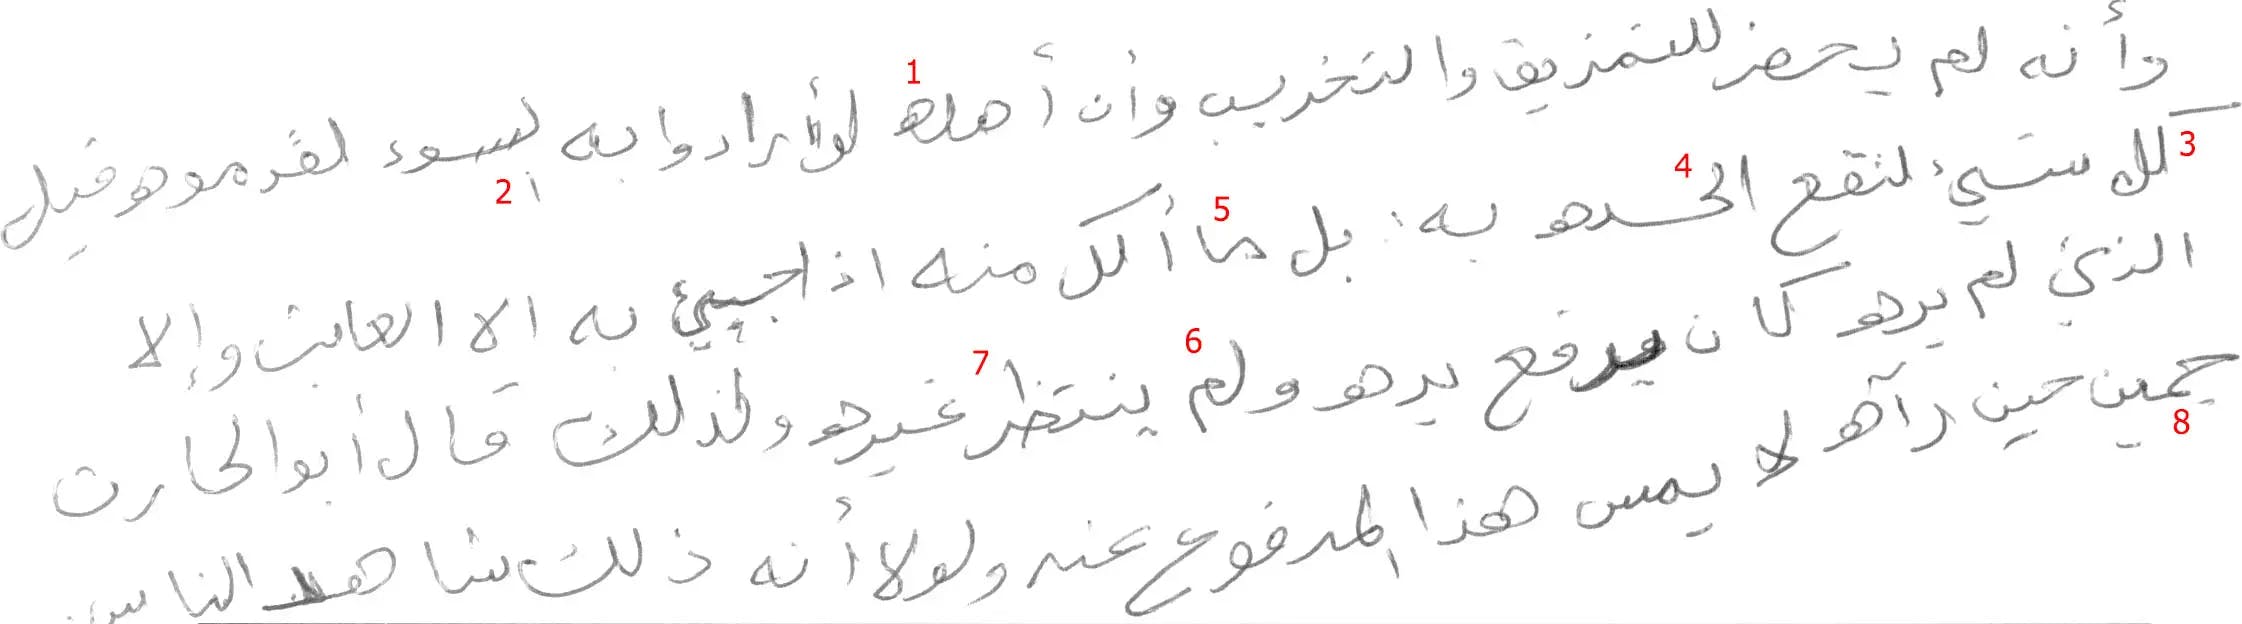 arabic-handwriting-01